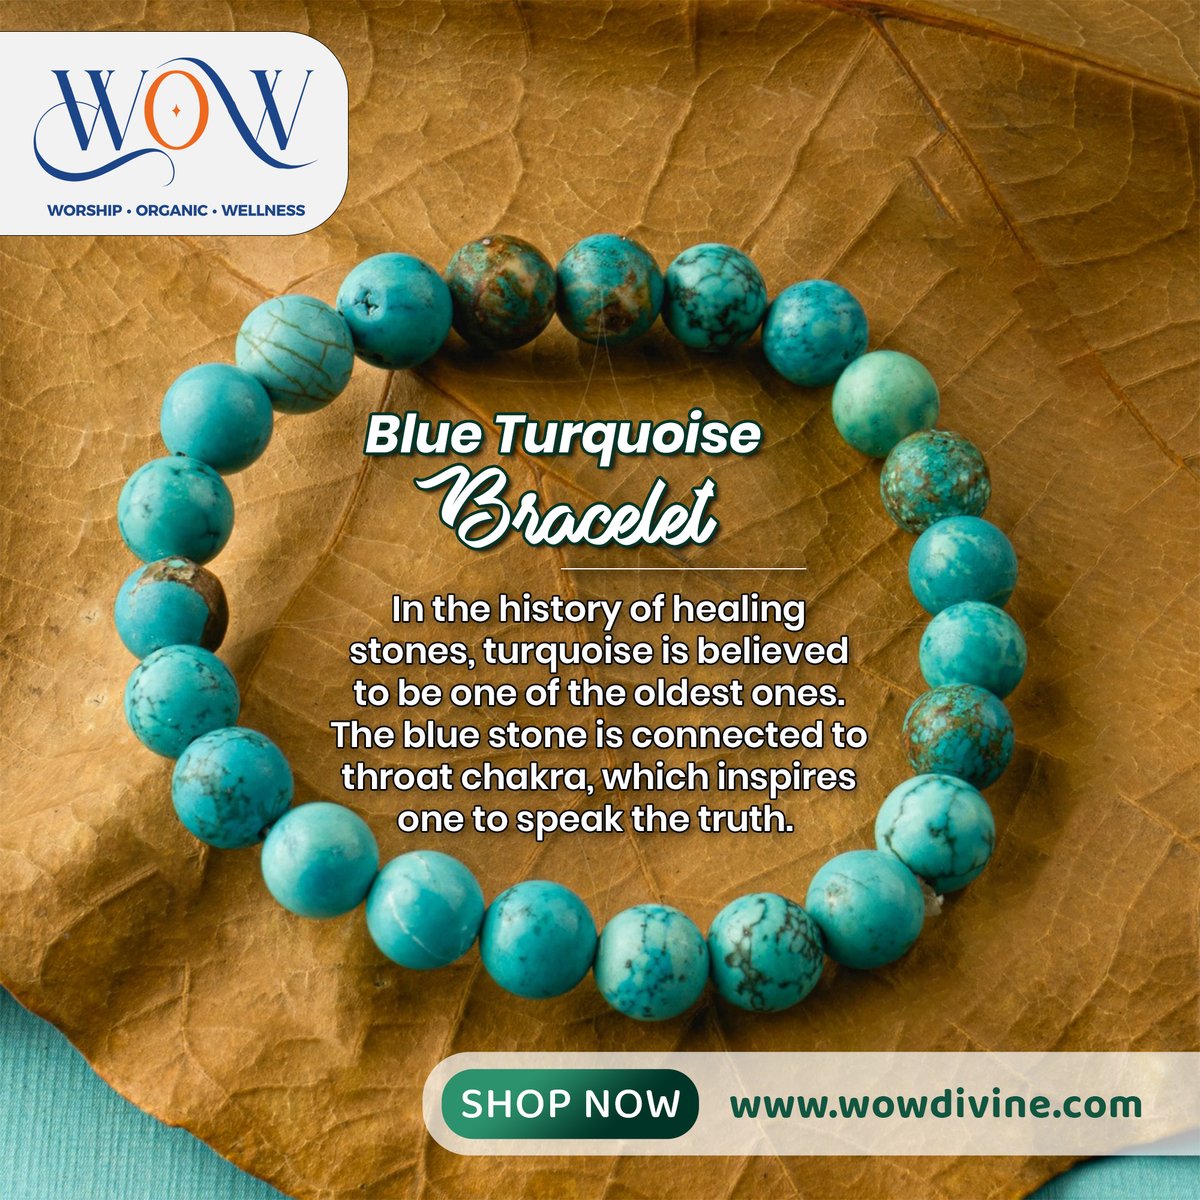 Blue Turquoise (Firoza) Bracelet

Buy Online : wowdivine.com/products/blue-…
.
.
#wow #wowdivine #wowdivineshop #turquoisebracelet #bluefirozabracelet #gemstonejewelry #handmadebracelet #bohojewelry #healingcrystals #fashionaccessories #crystalenergy #spiritualjewelry